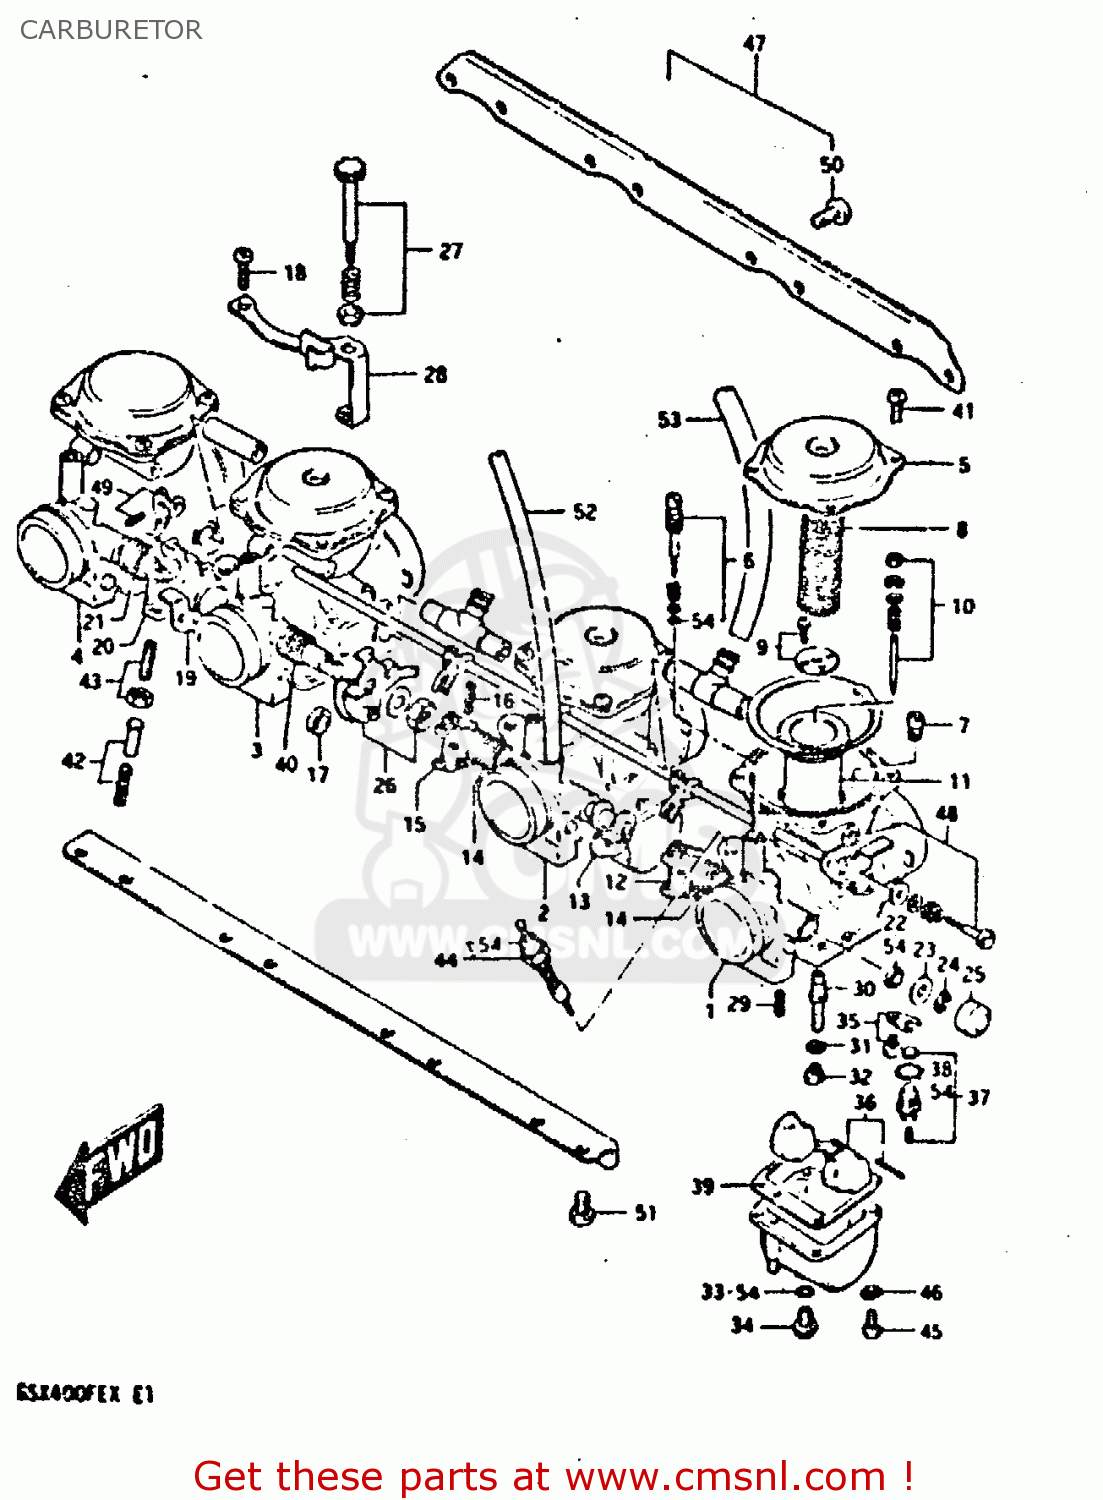 Suzuki CARBURETOR, NO. 2 1320233200